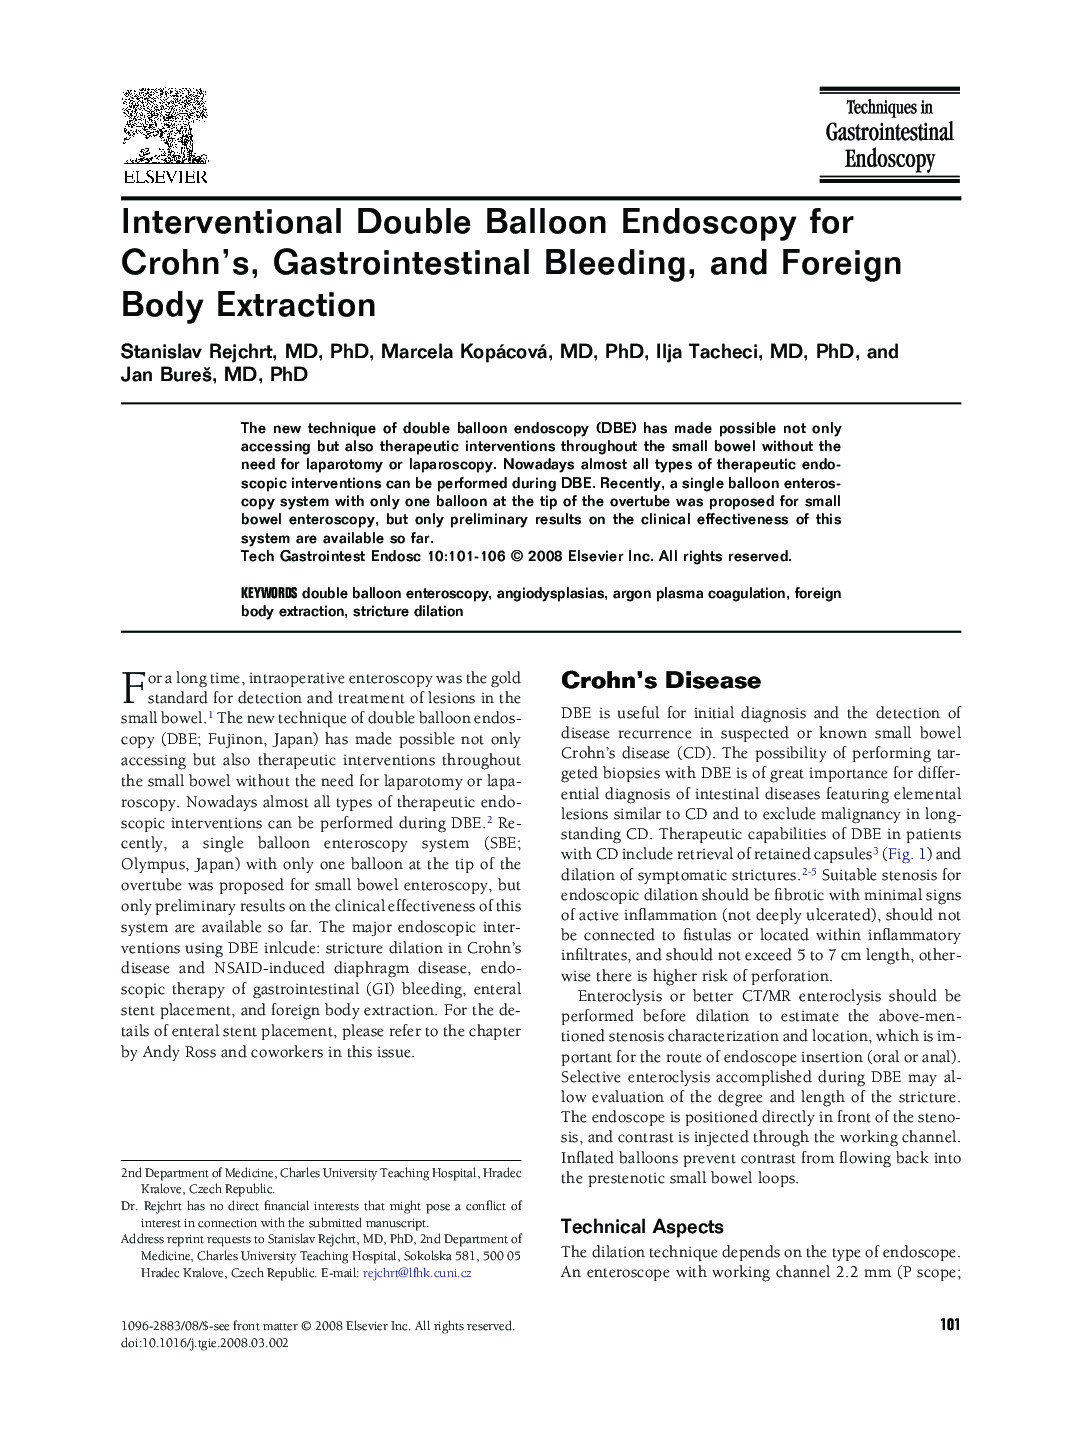 Interventional Double Balloon Endoscopy for Crohn's, Gastrointestinal Bleeding, and Foreign Body Extraction